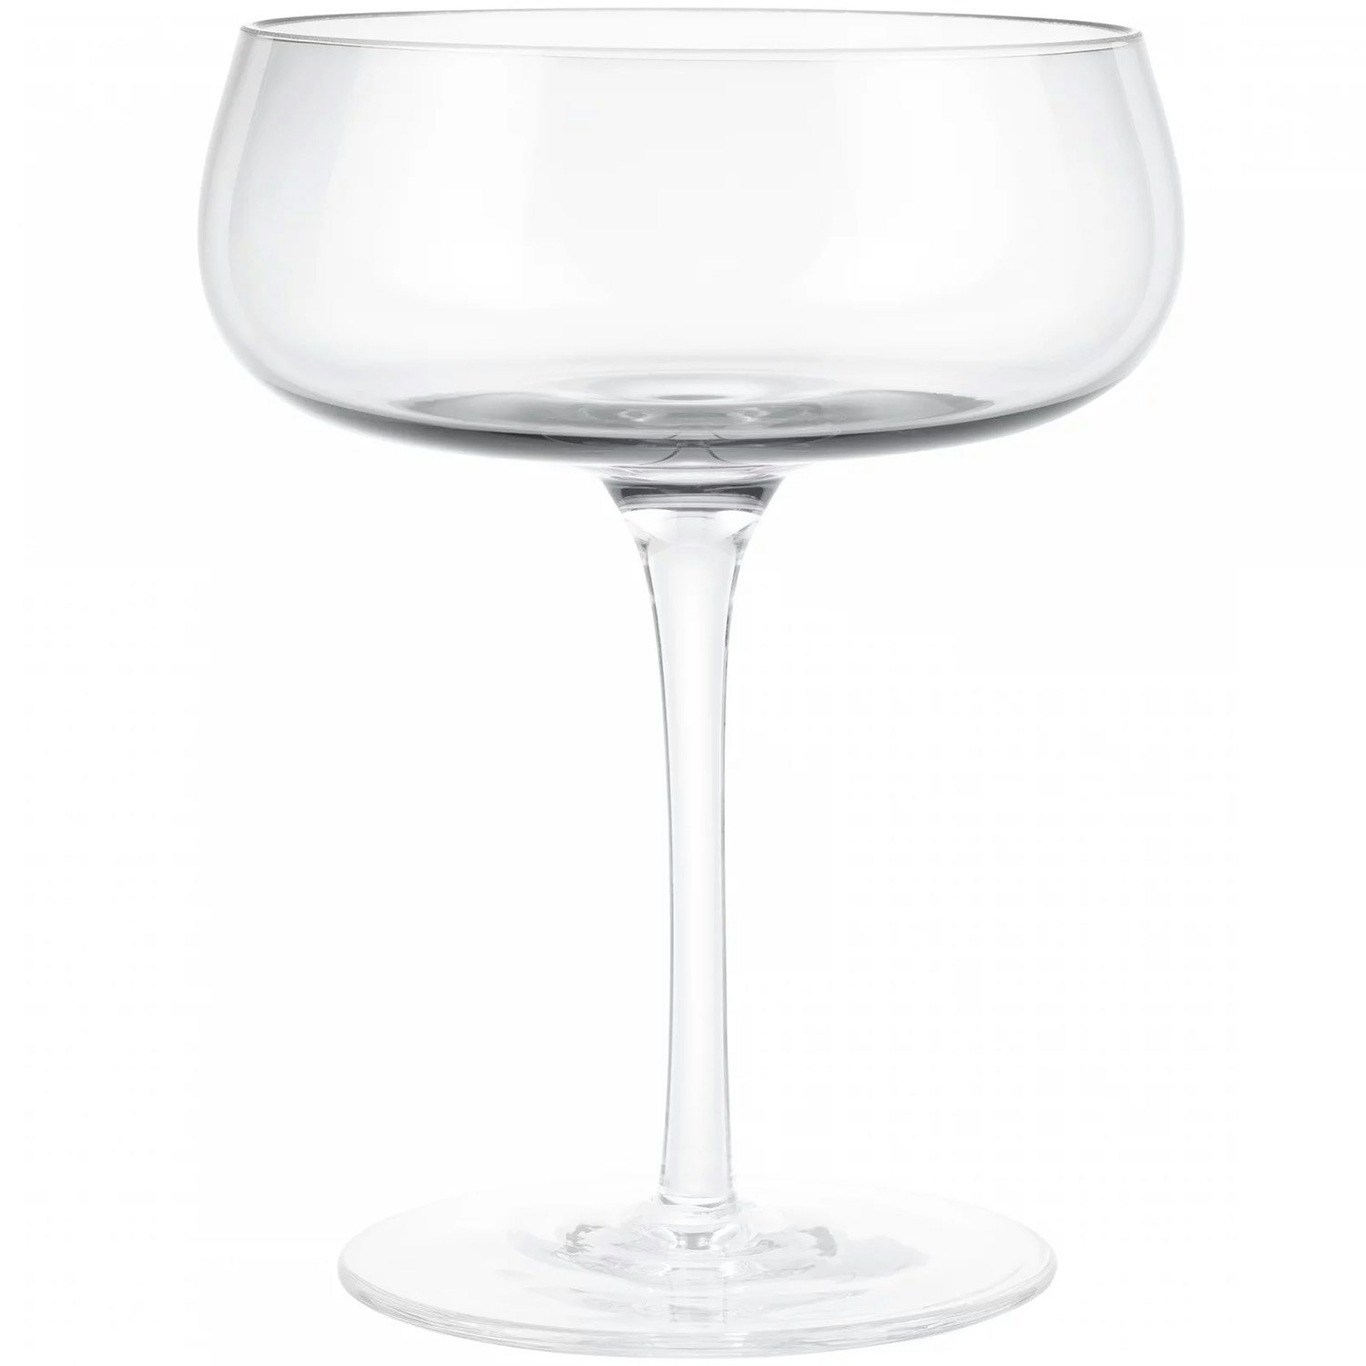 https://royaldesign.com/image/2/blomus-belo-set-of-2-champagne-saucers-h14-cm-11-cm-clear-glass-0?w=800&quality=80